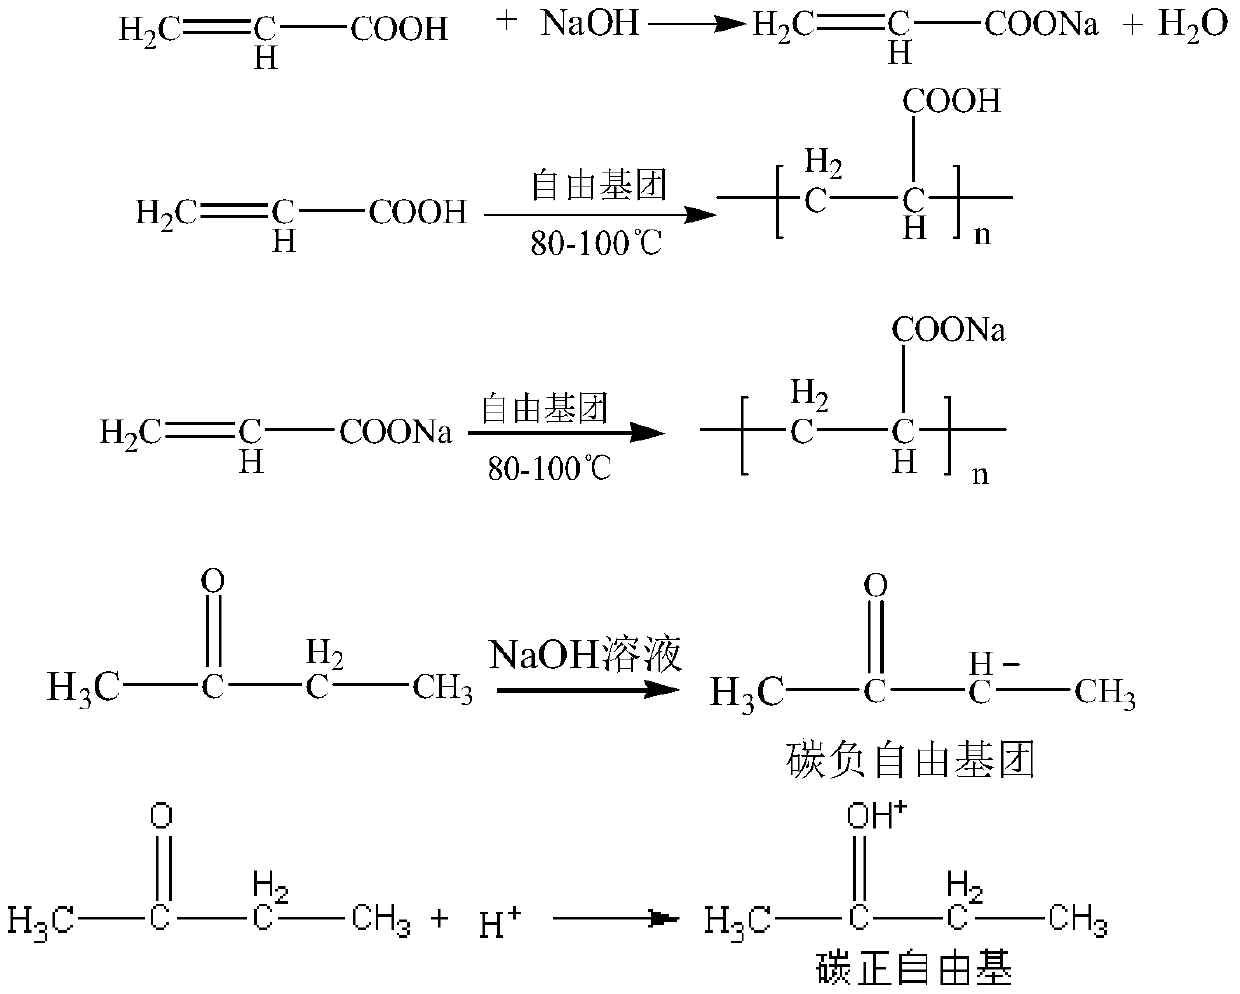 Treatment method of butanone residues containing acrylic acid adhesives